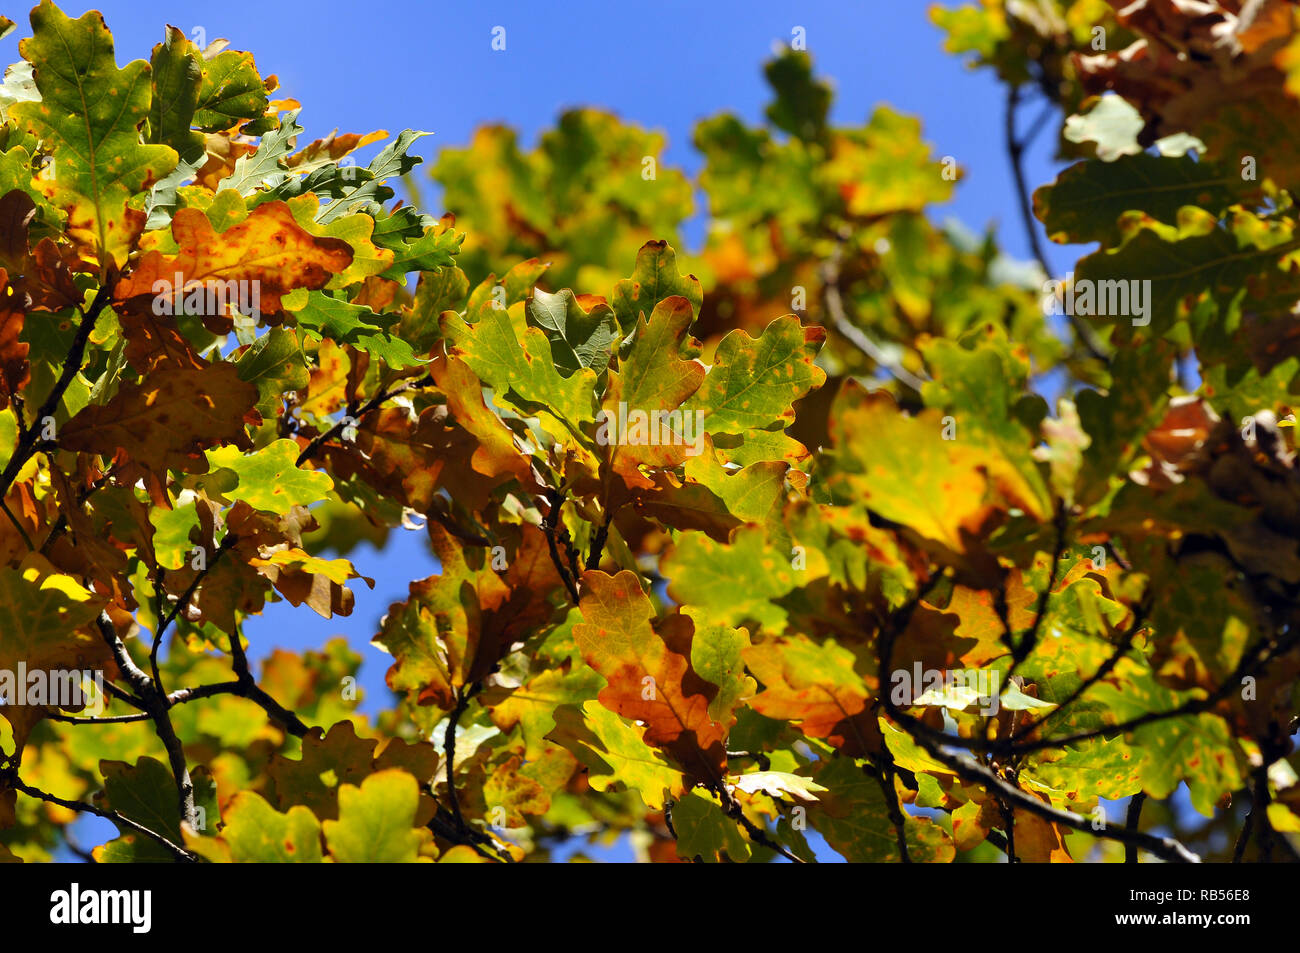 Amarillentas hojas de roble. Roble, Eichen, tölgy, Quercus sp. Foto de stock